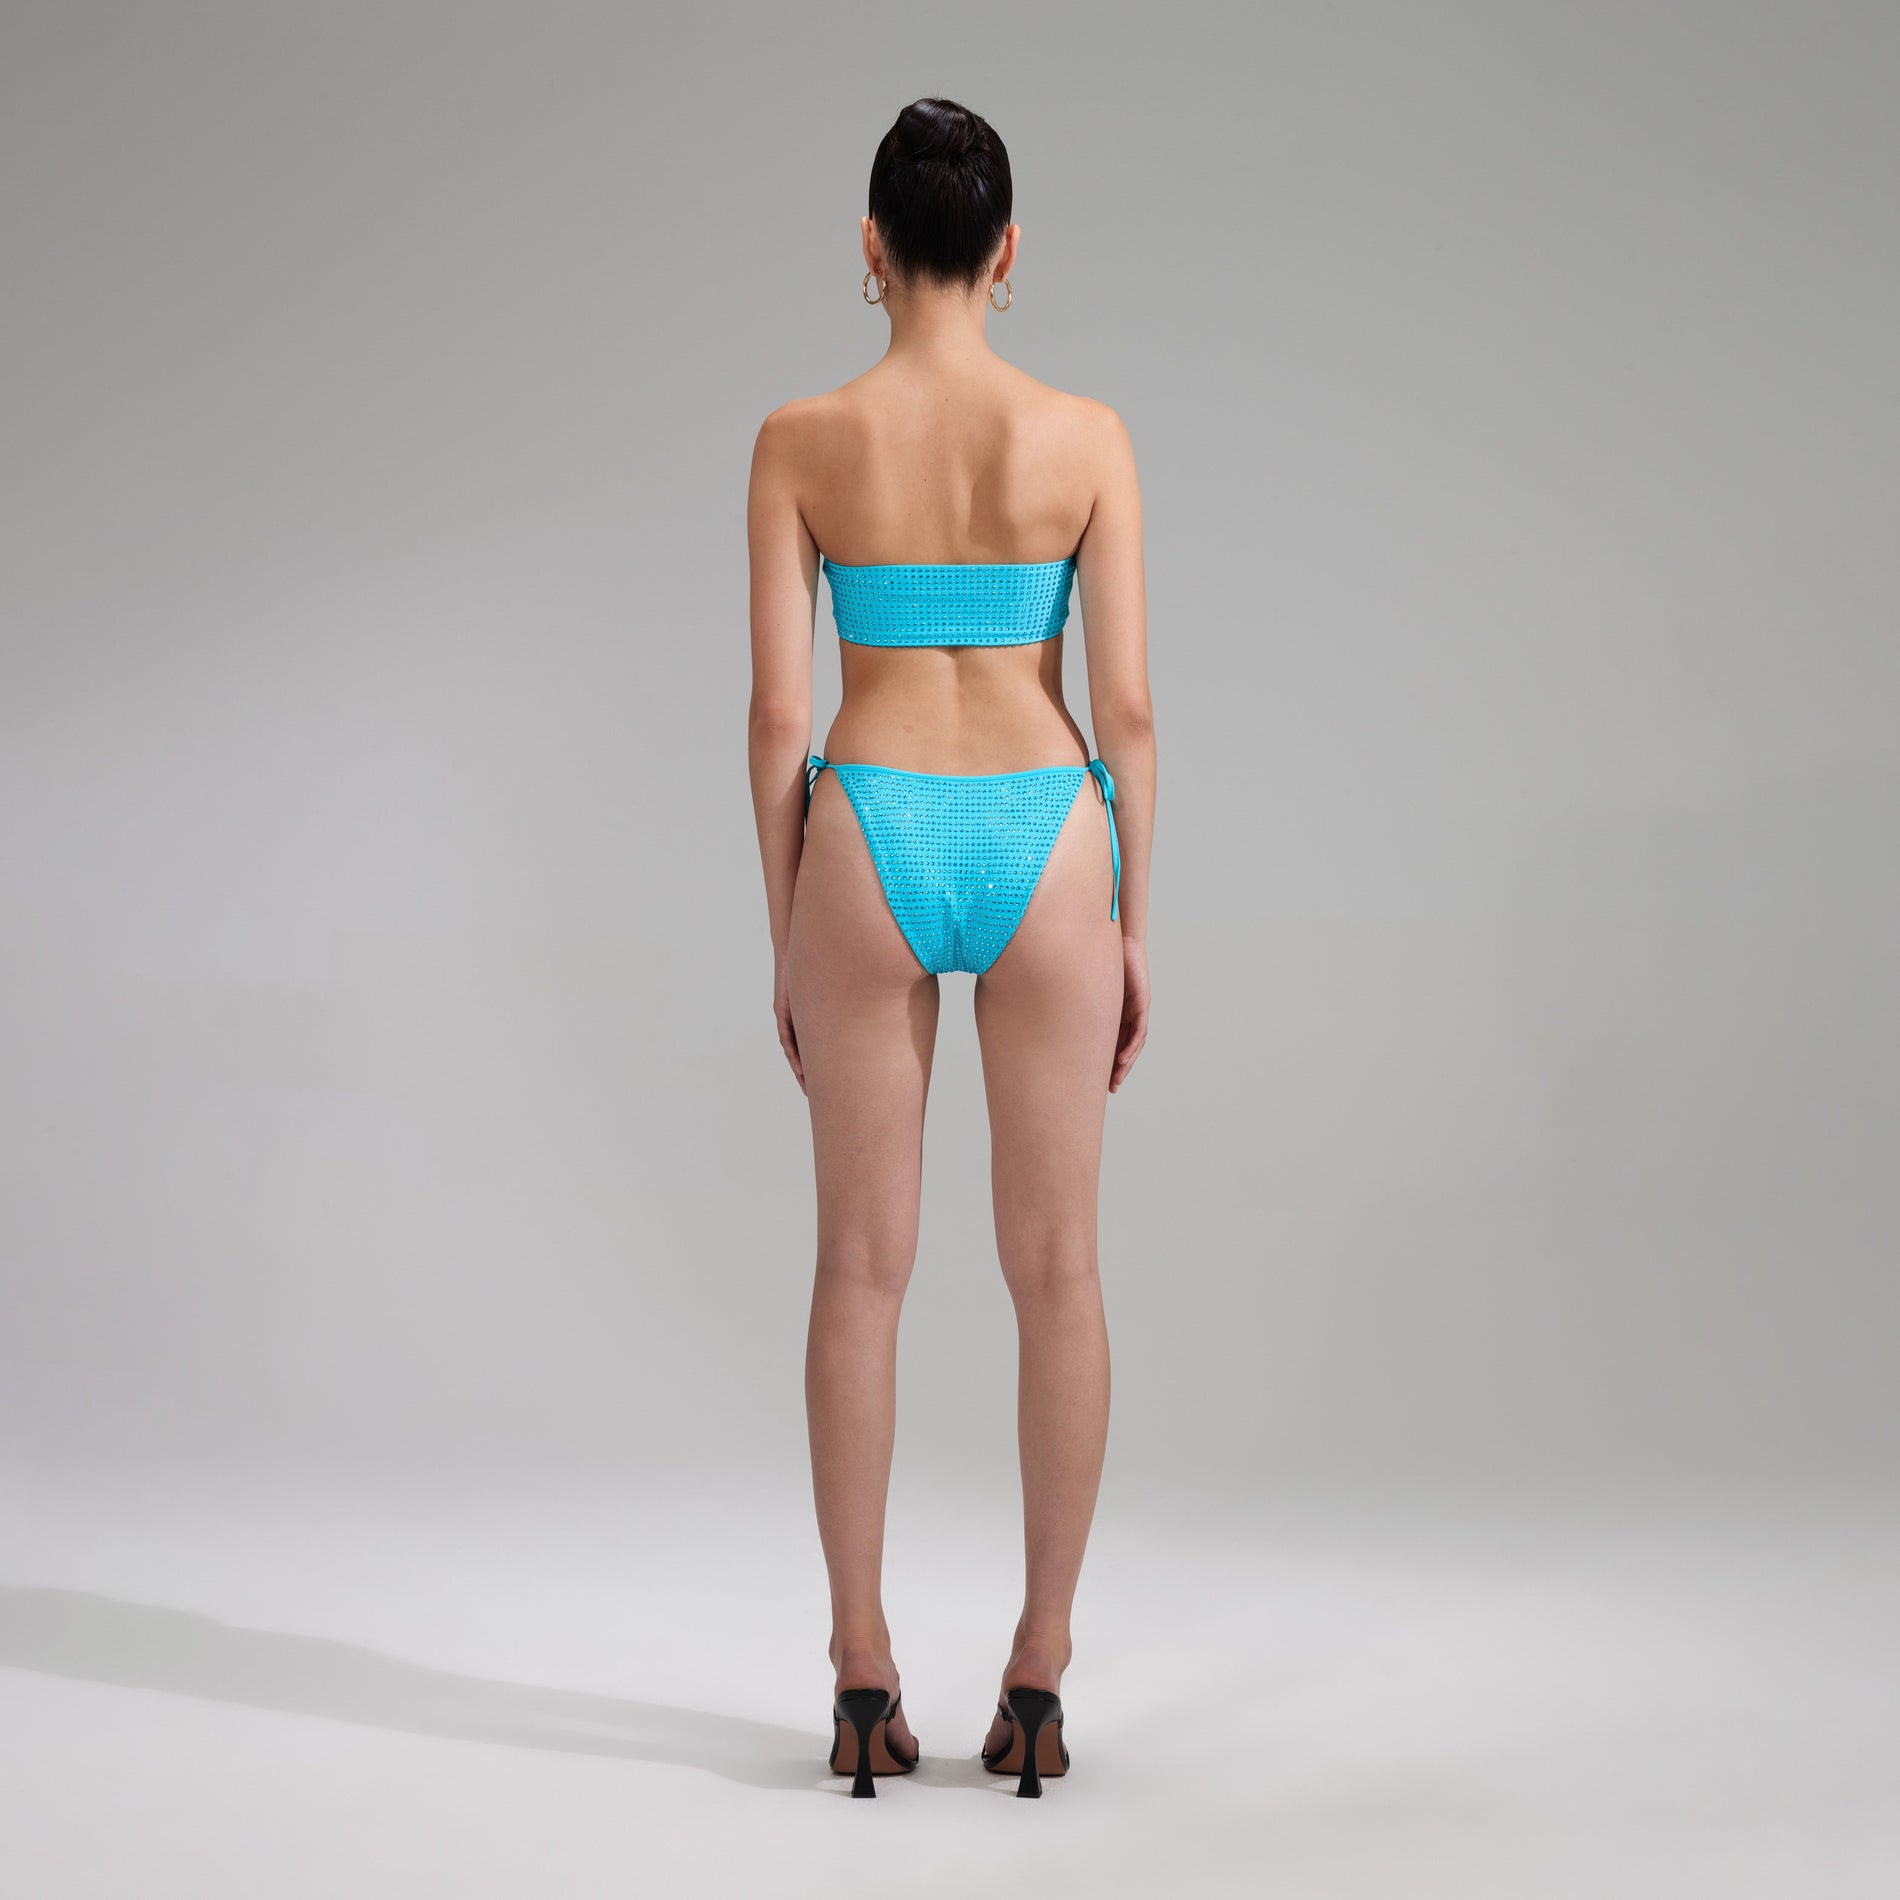 A woman wearing the Blue Rhinestone Brazilian Bikini Briefs